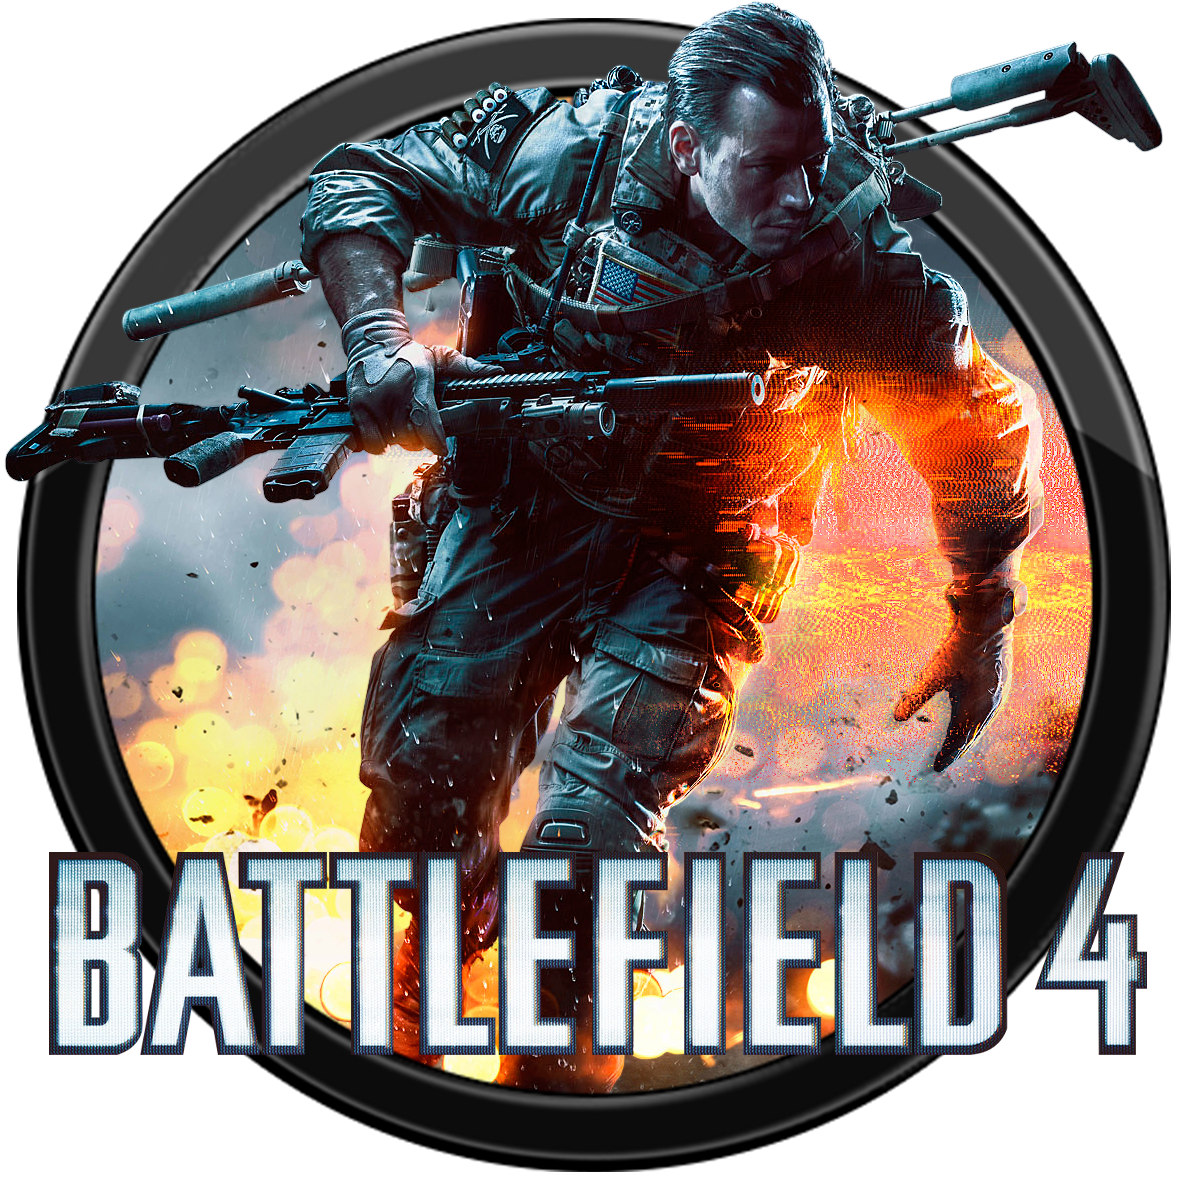 Battlefield 4 ROBLOX PS4 by bloxseb59 on DeviantArt